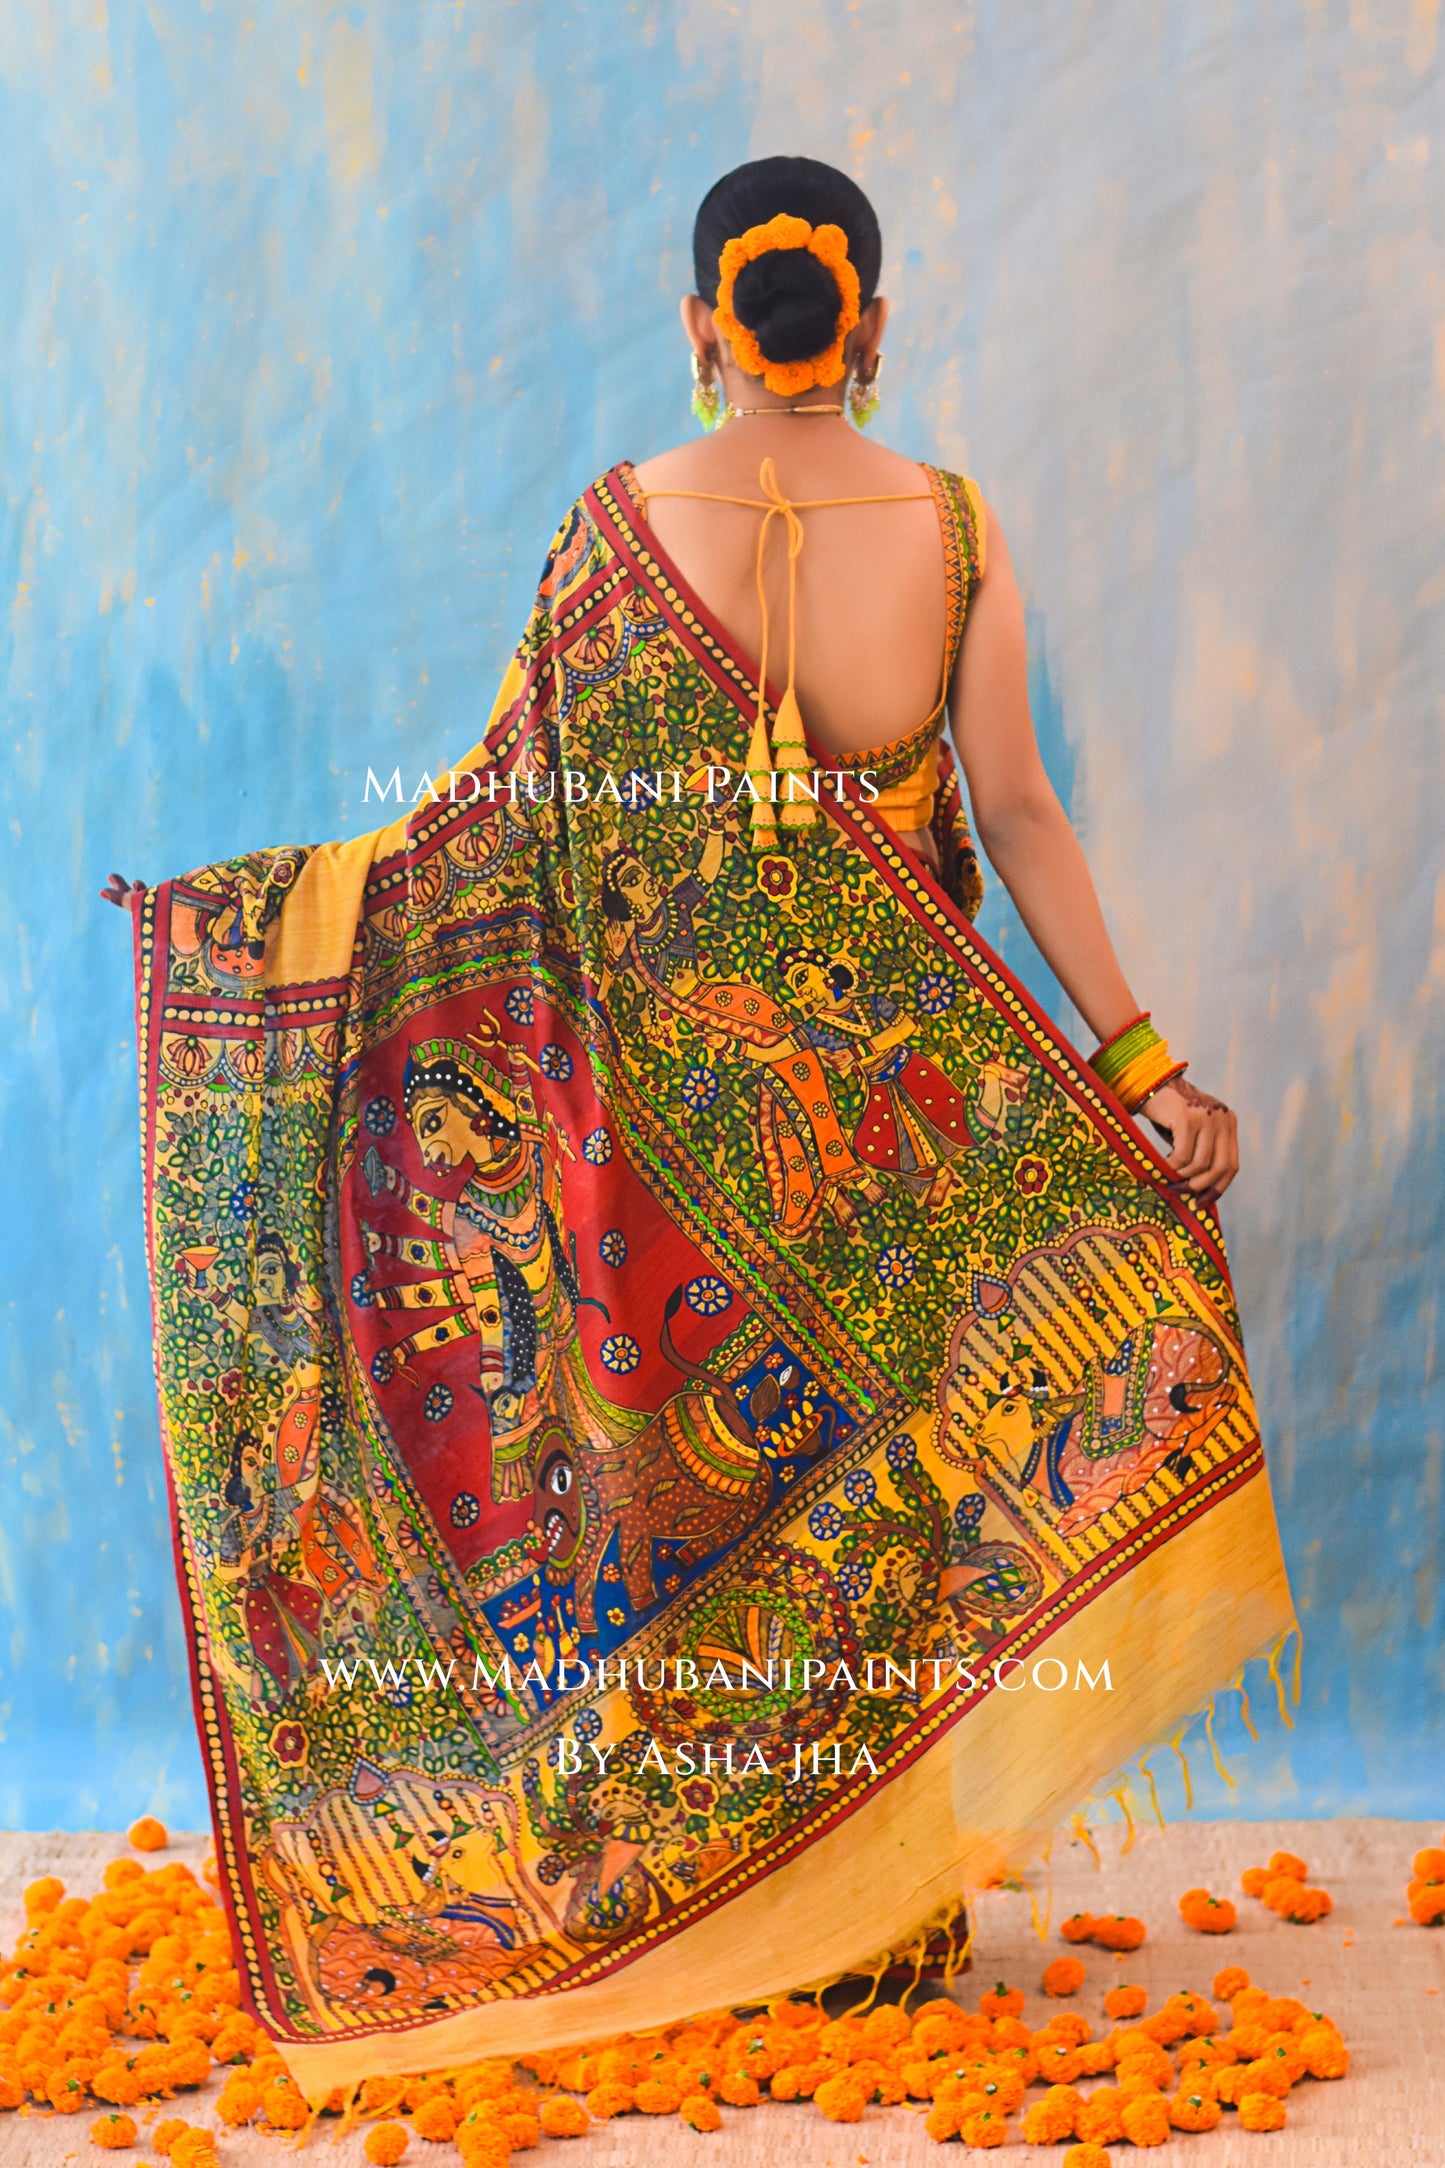 KAMESHWARI Madhubani Hand-painted Chanderi Silk Saree